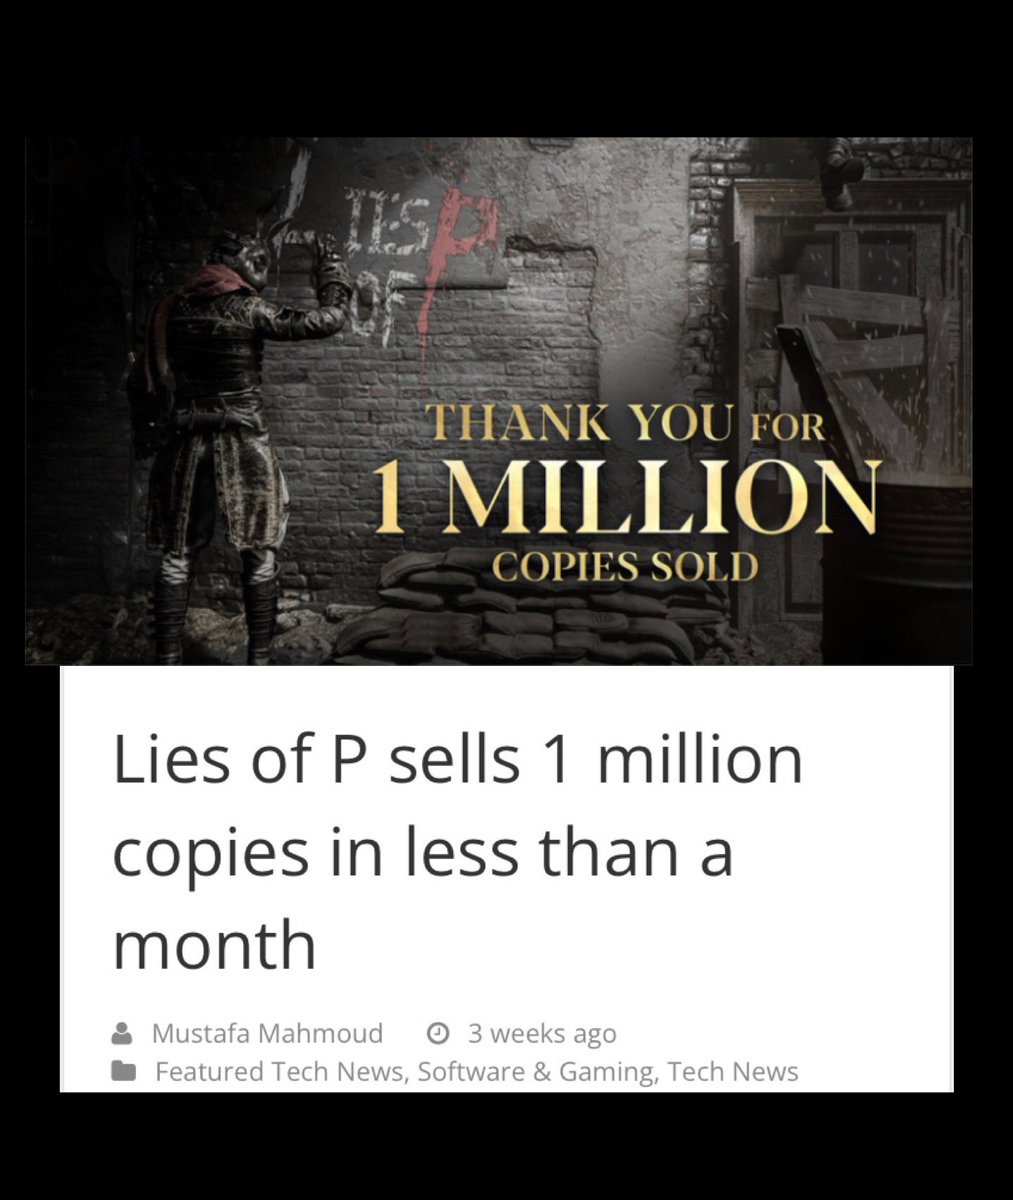 Lies of P passes 1 million units sold